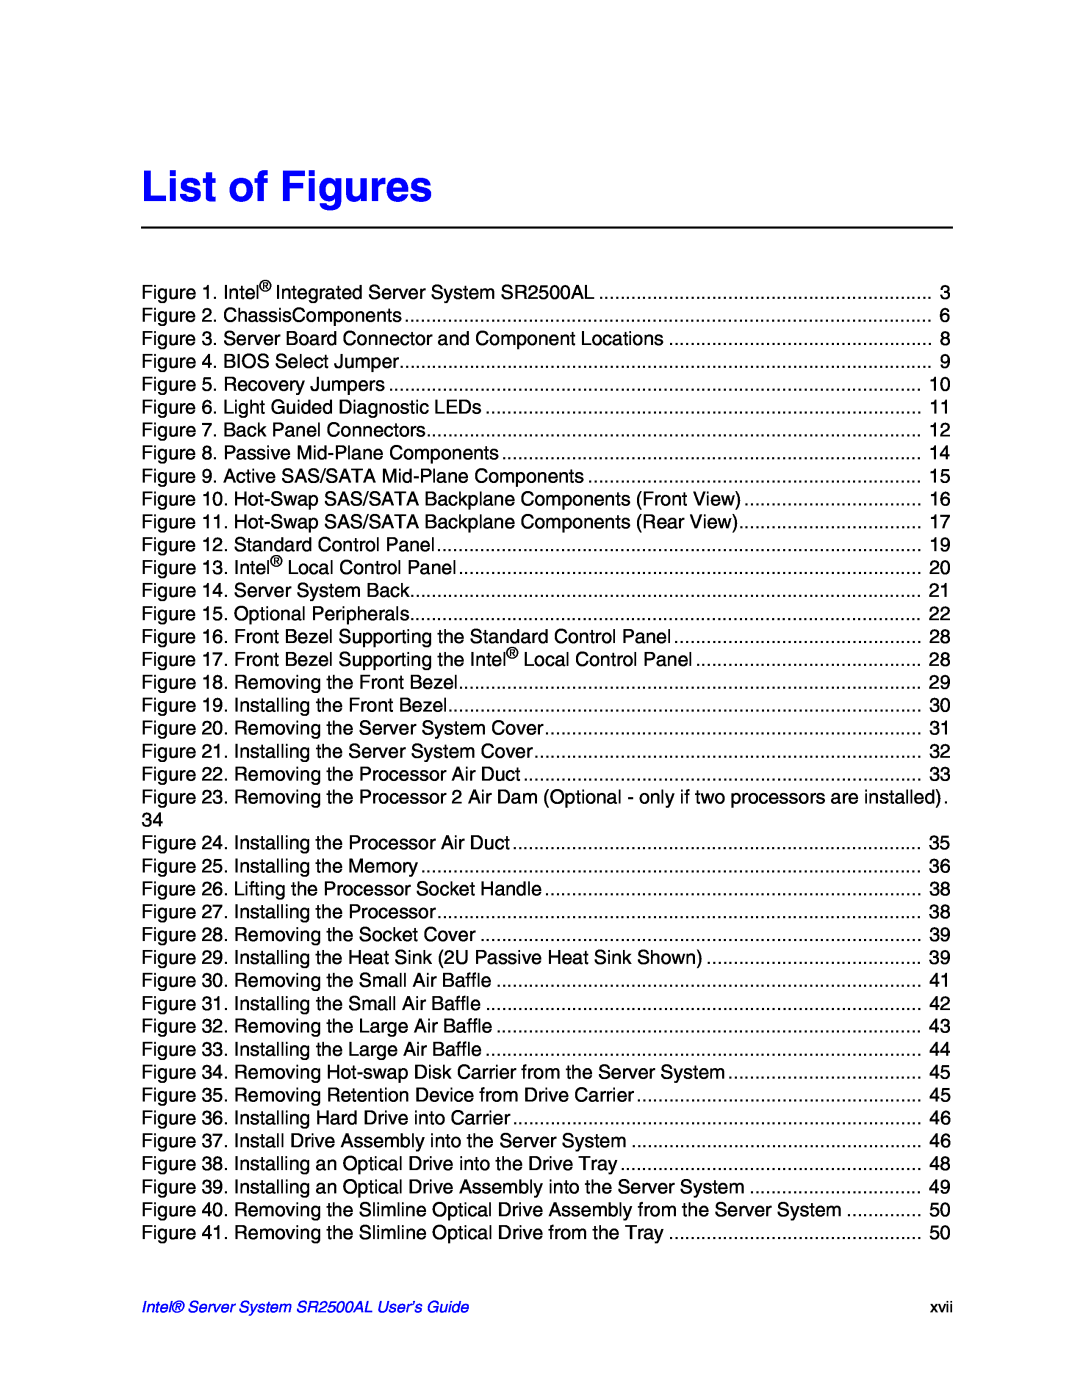 Intel SR2500AL manual List of Figures 